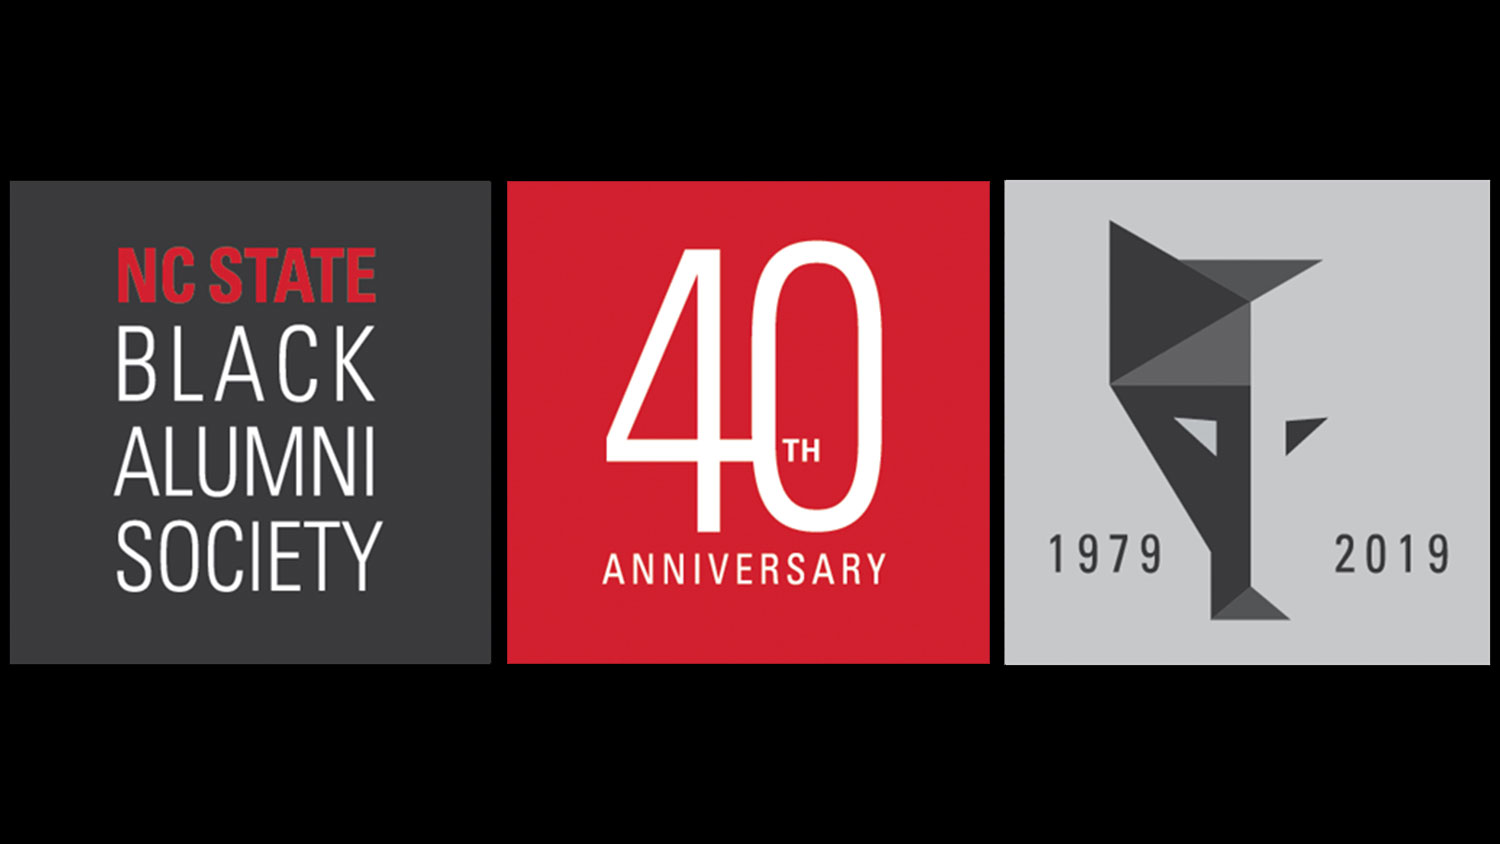 Black Alumni Society 40th anniversary graphic